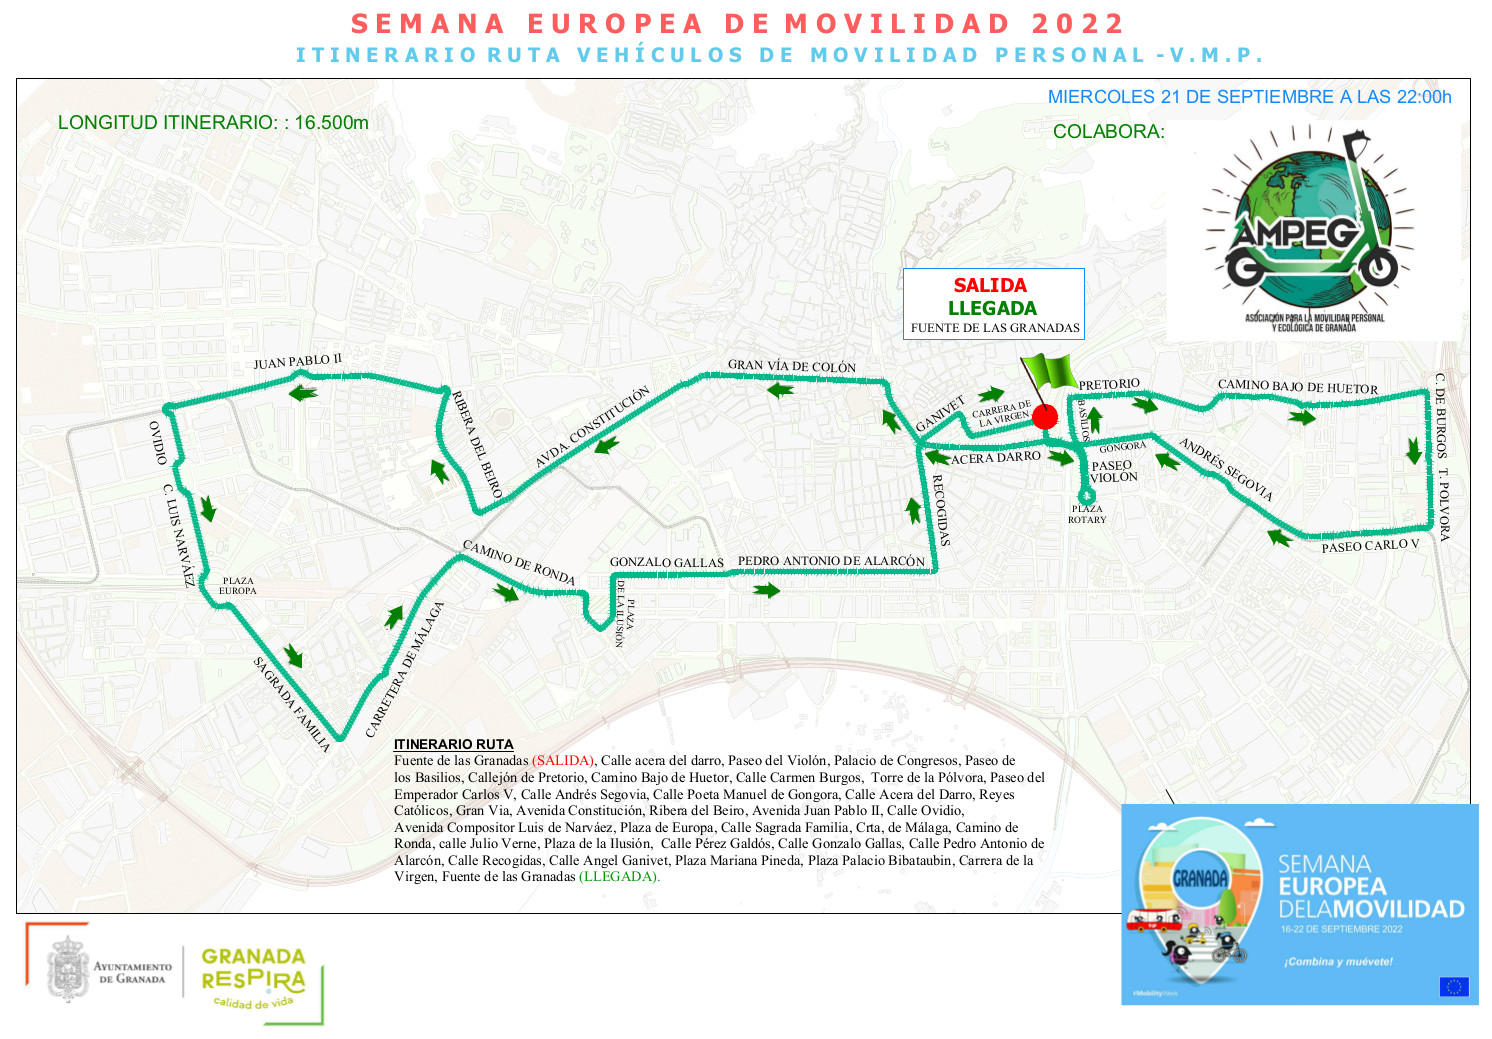 Ruta itinerario VMP 2022 SEM Granada